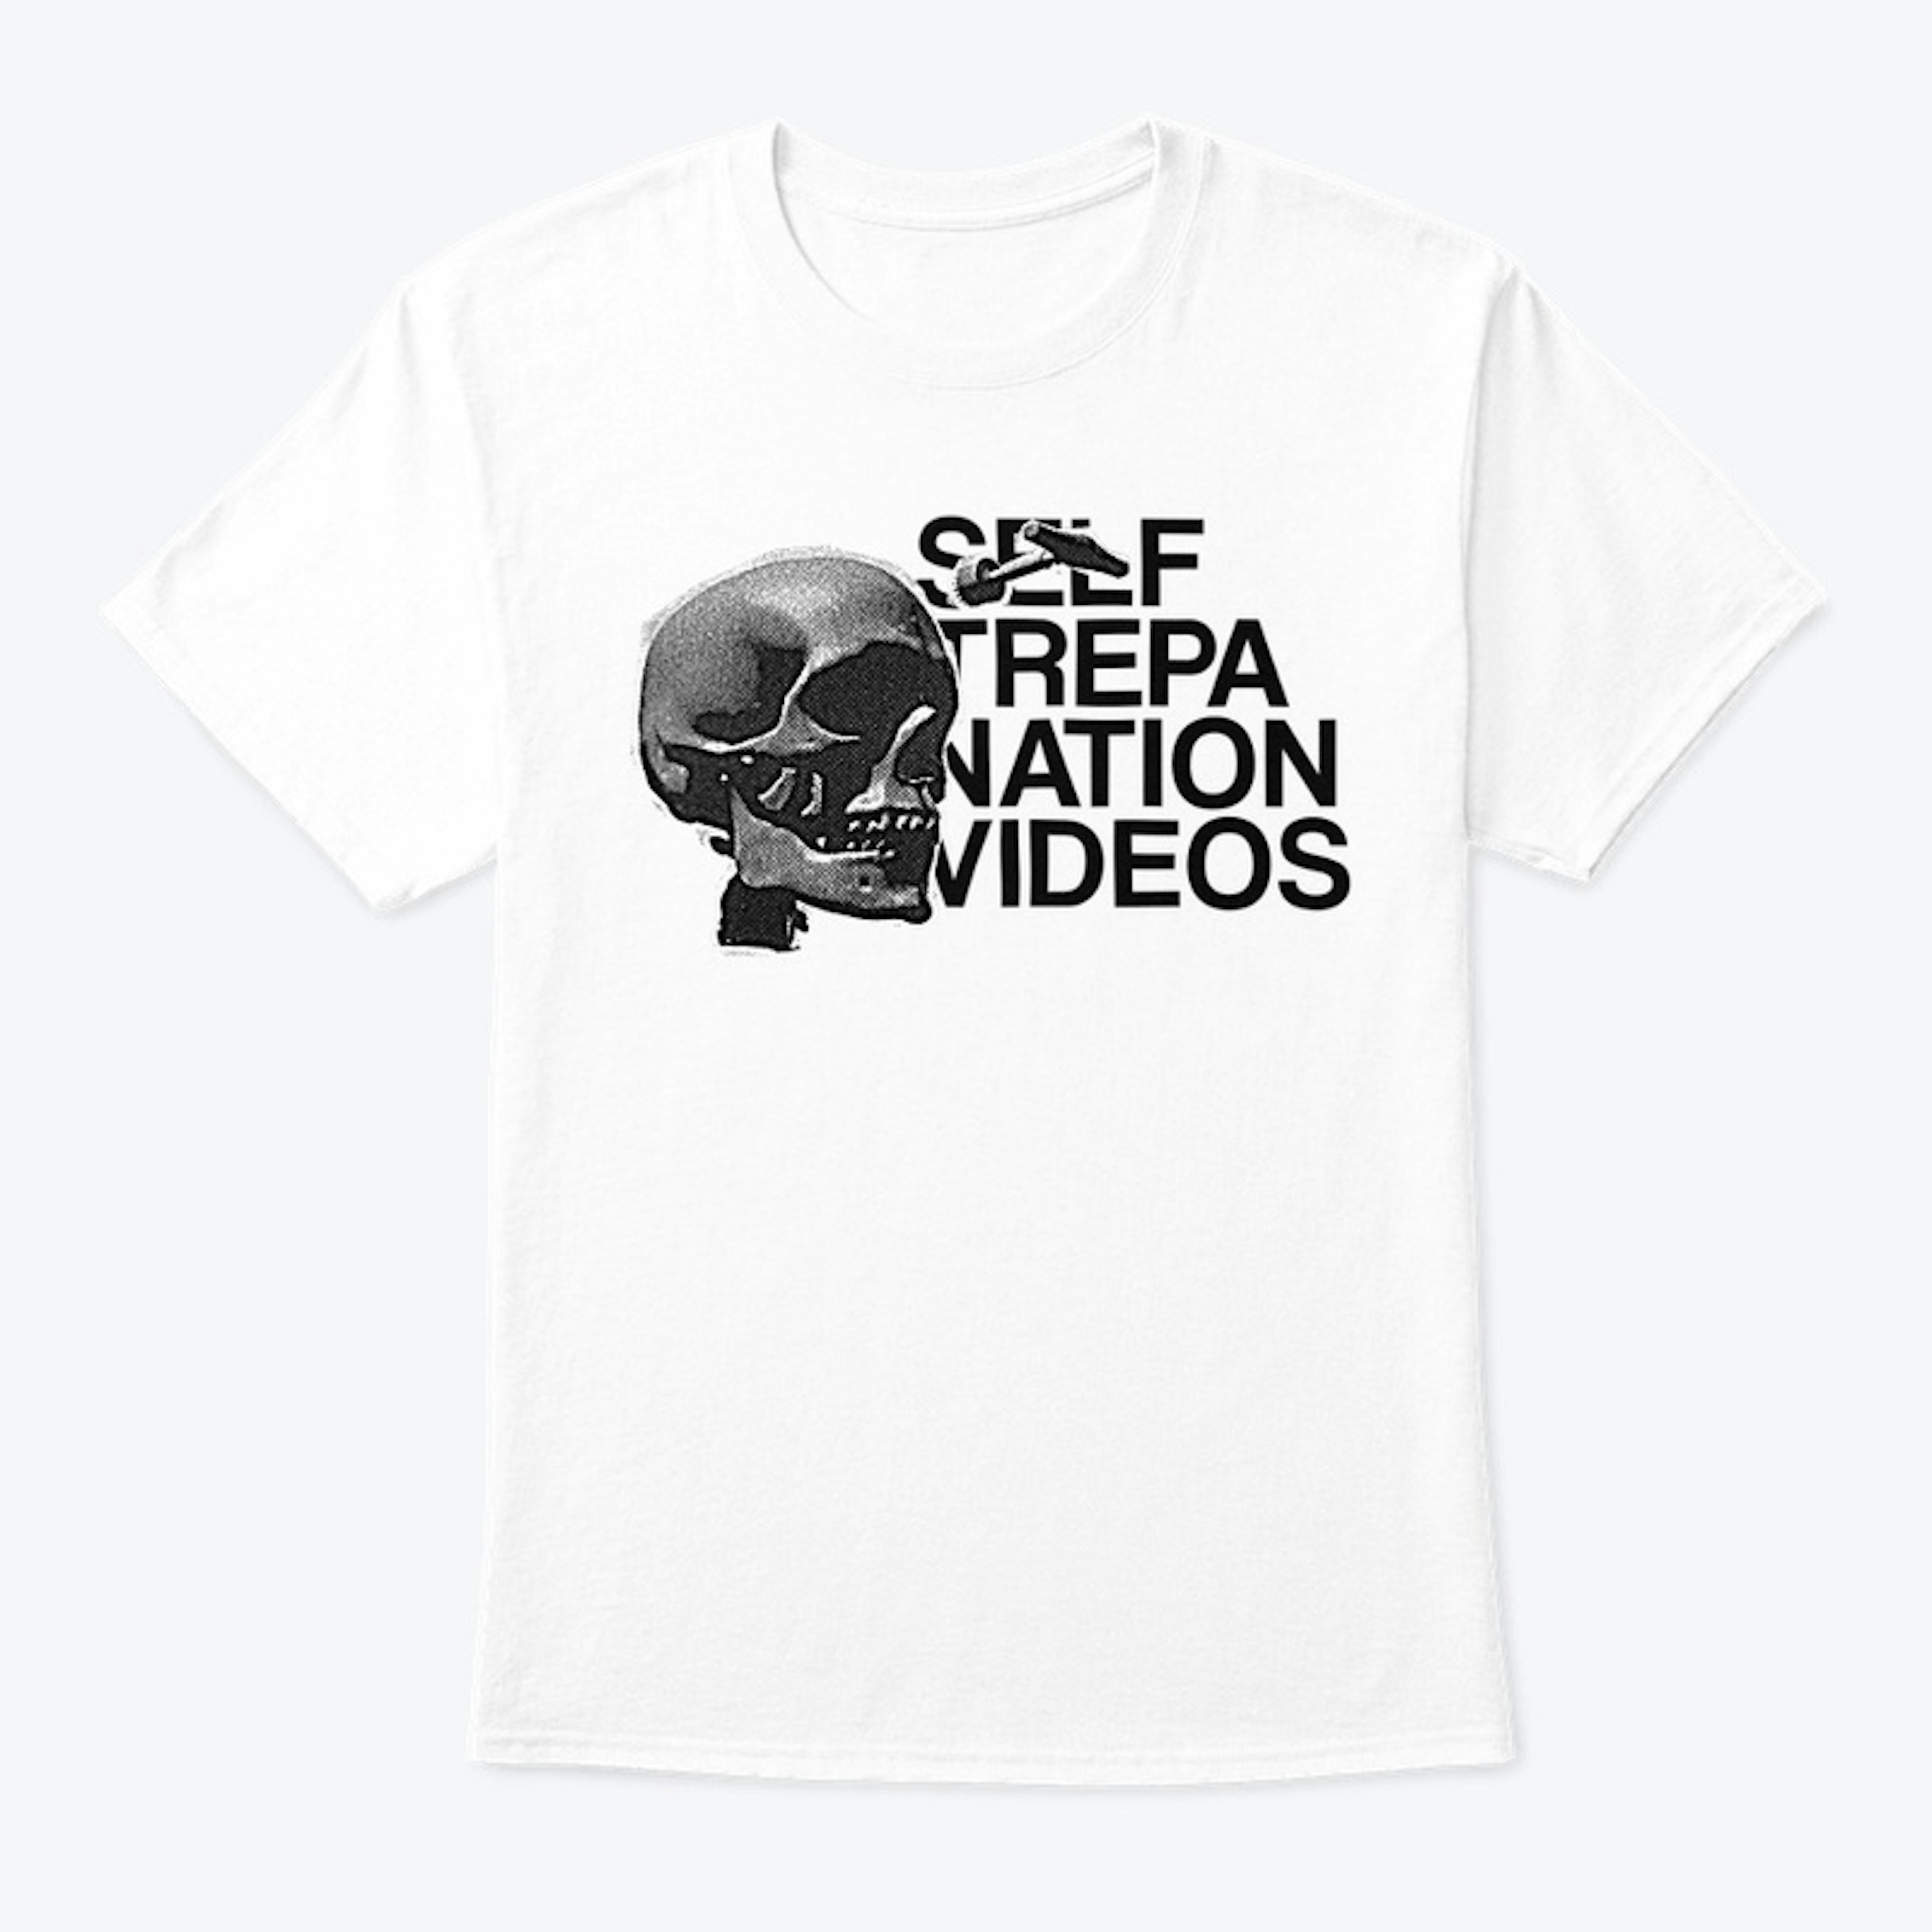 self trepanation videos - WHITE